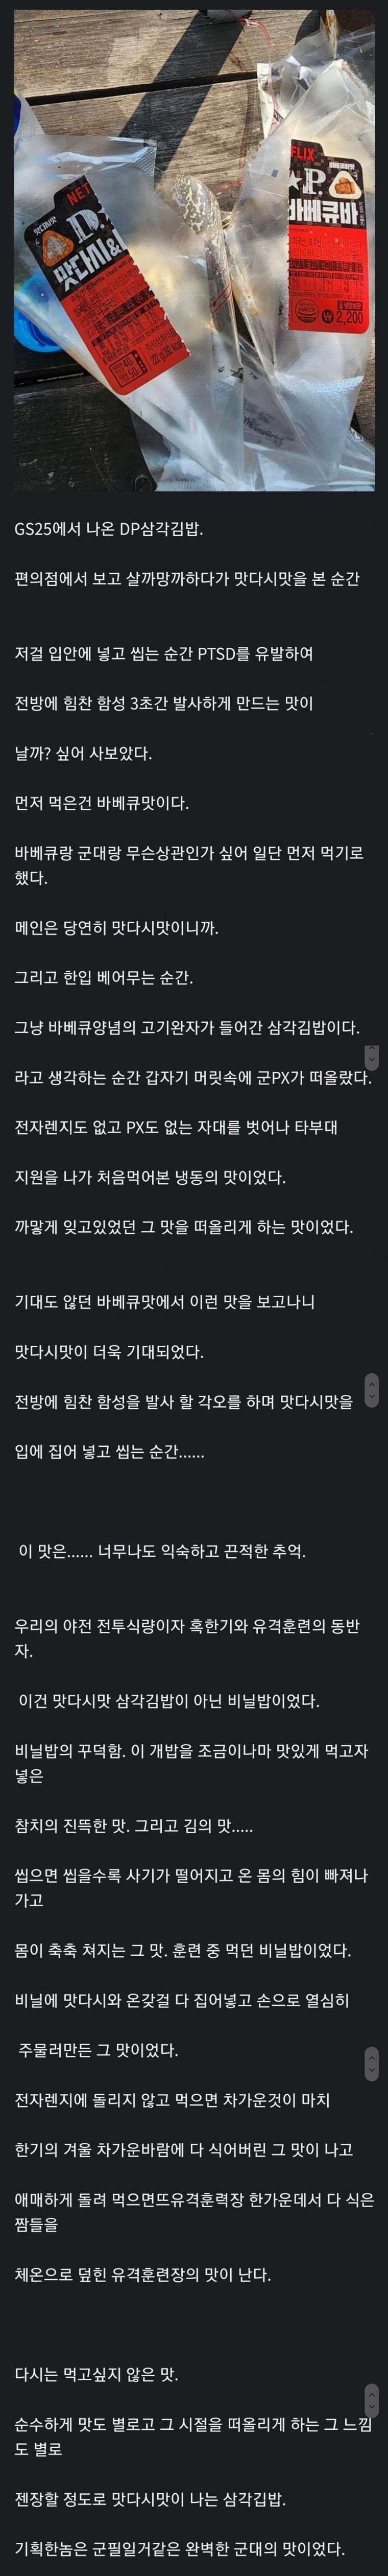 GS25 DP 삼각김밥 리뷰